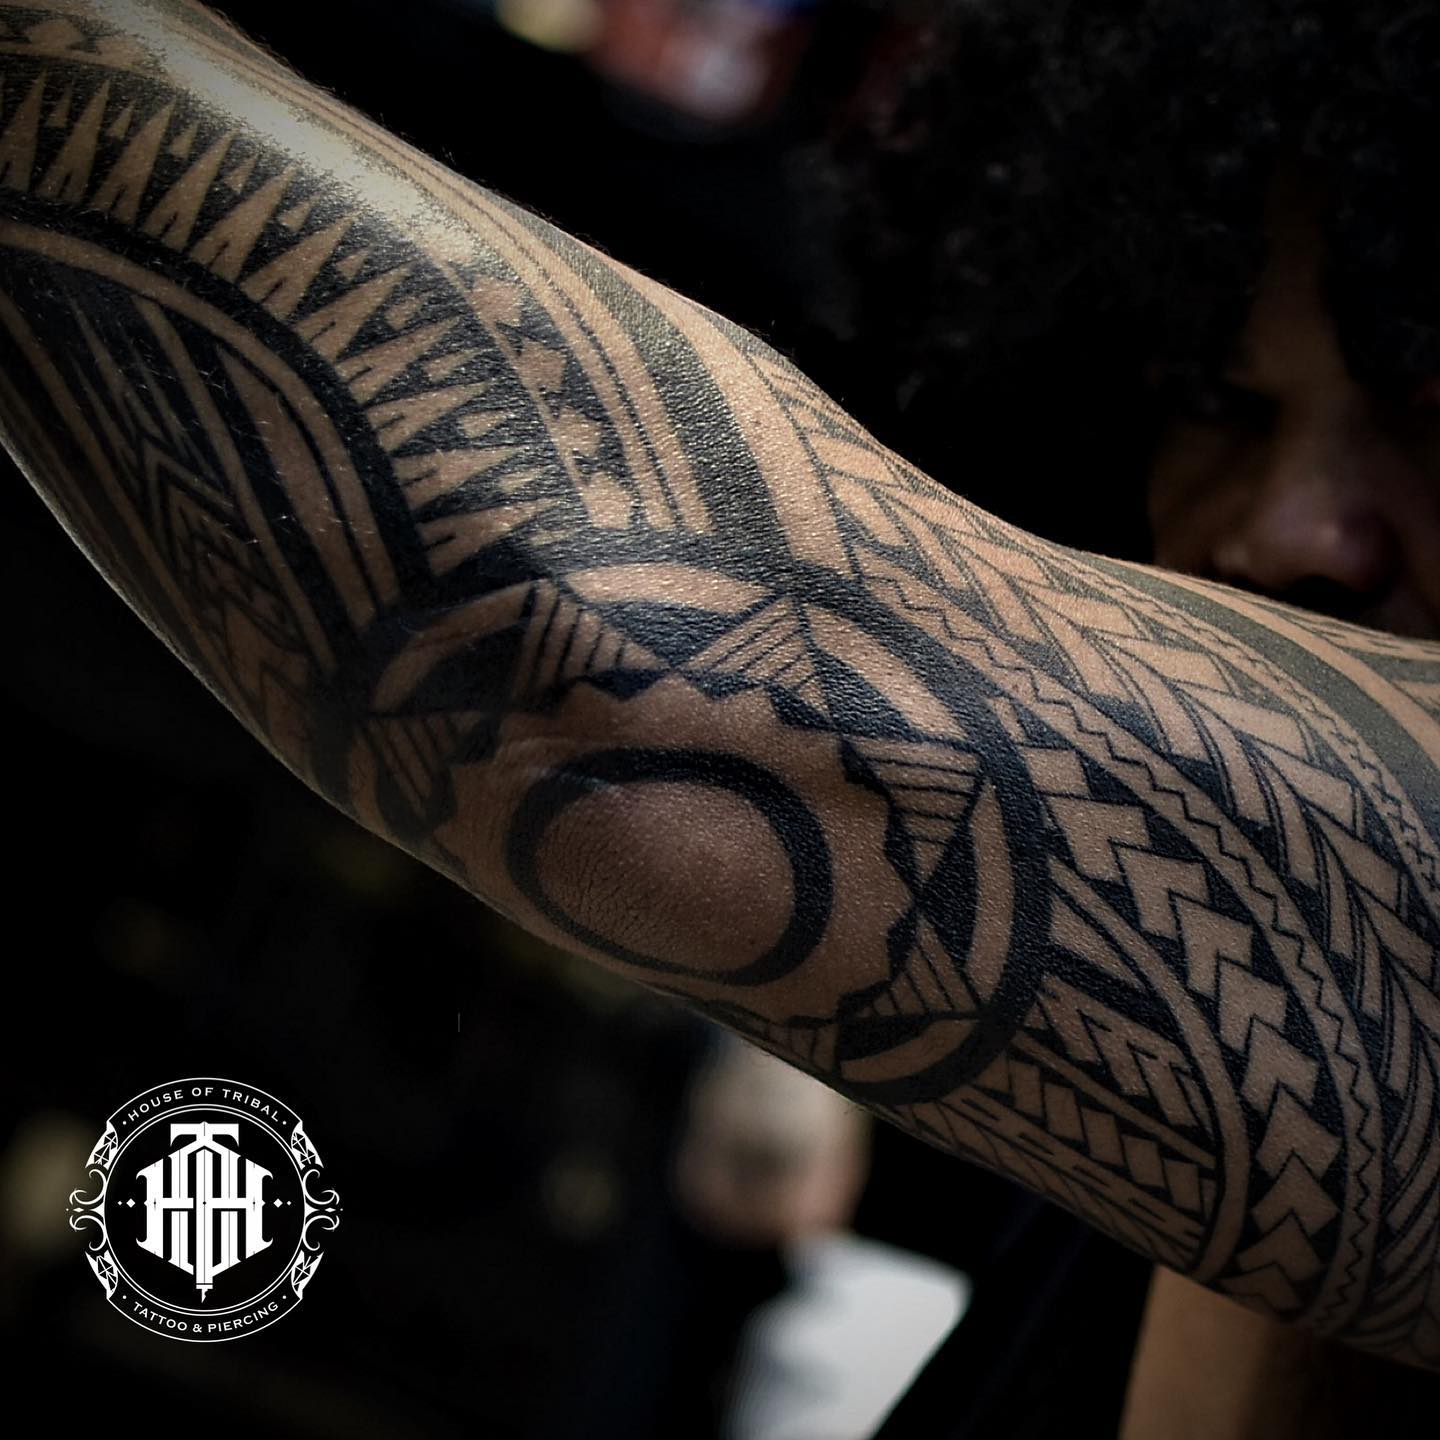 tribal tattoos on arm sleeve by houseoftribal